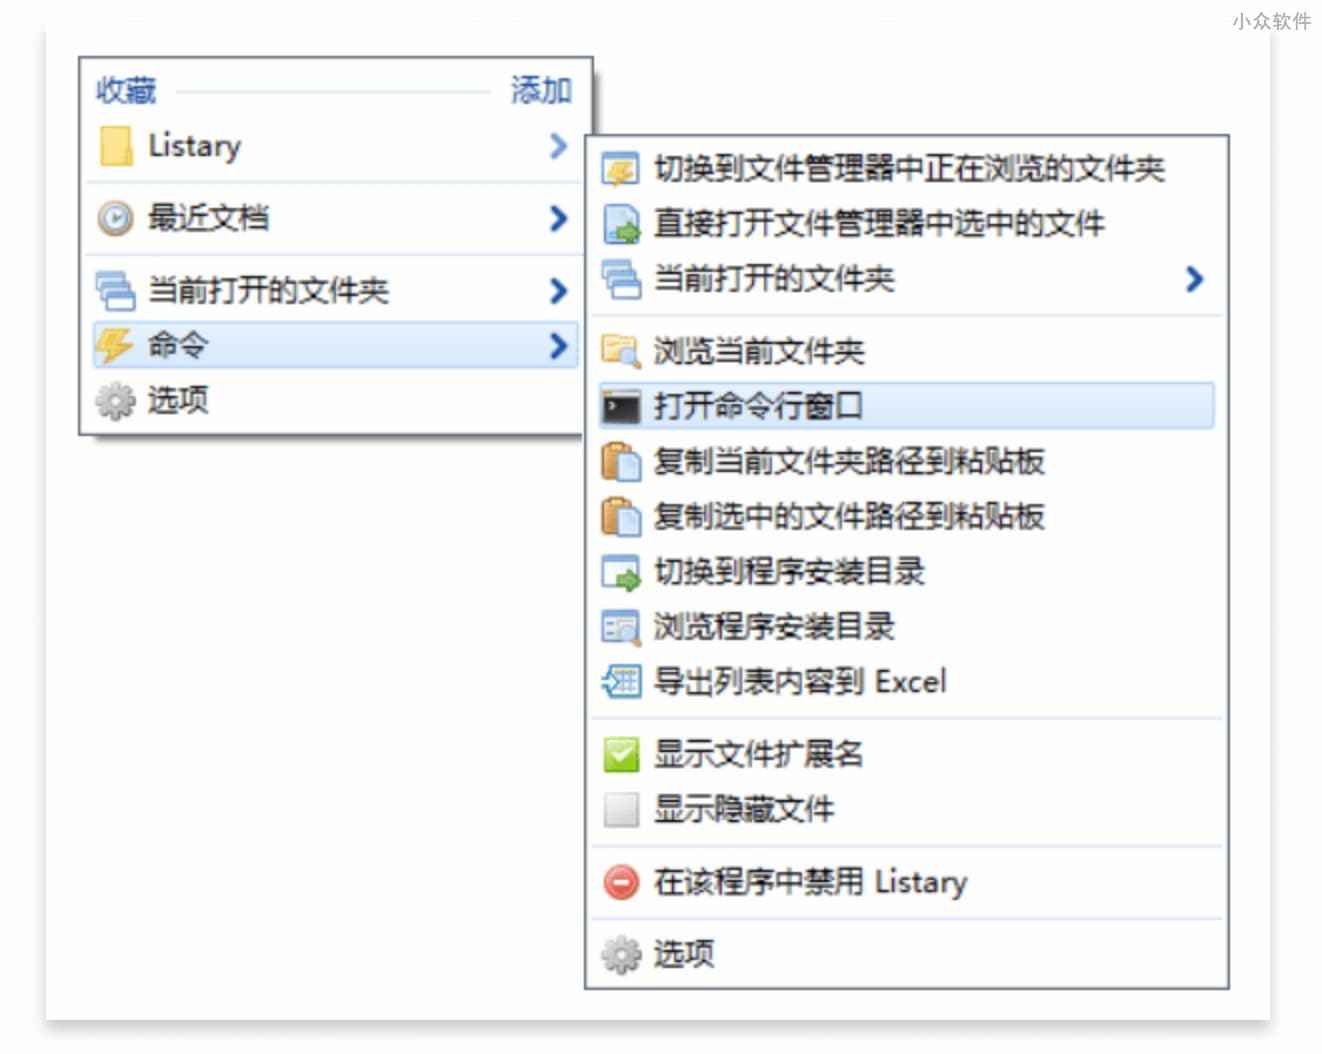 Listary Pro - 本地文件搜索工具，特惠[Windows] 7